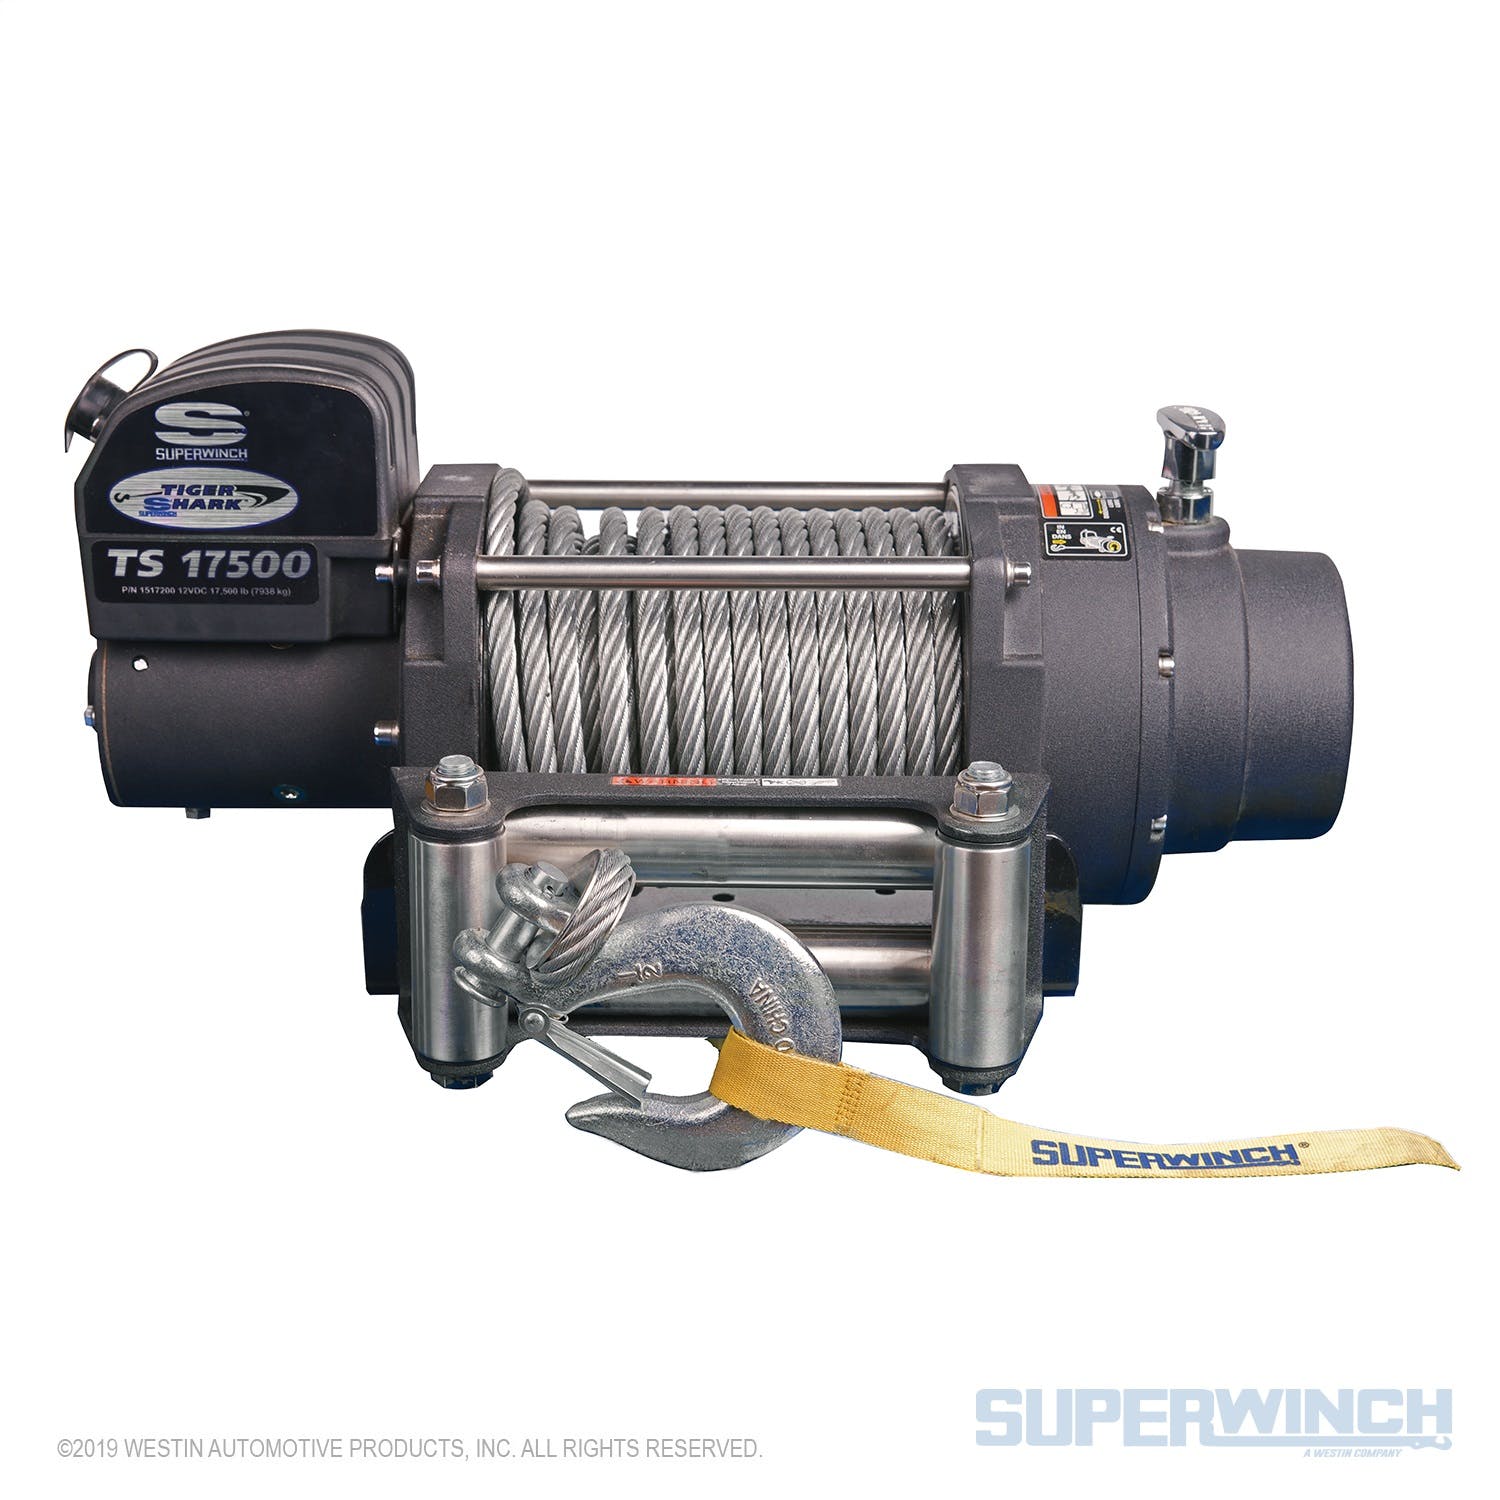 Superwinch 1517200 Tiger Shark 17500 Winch